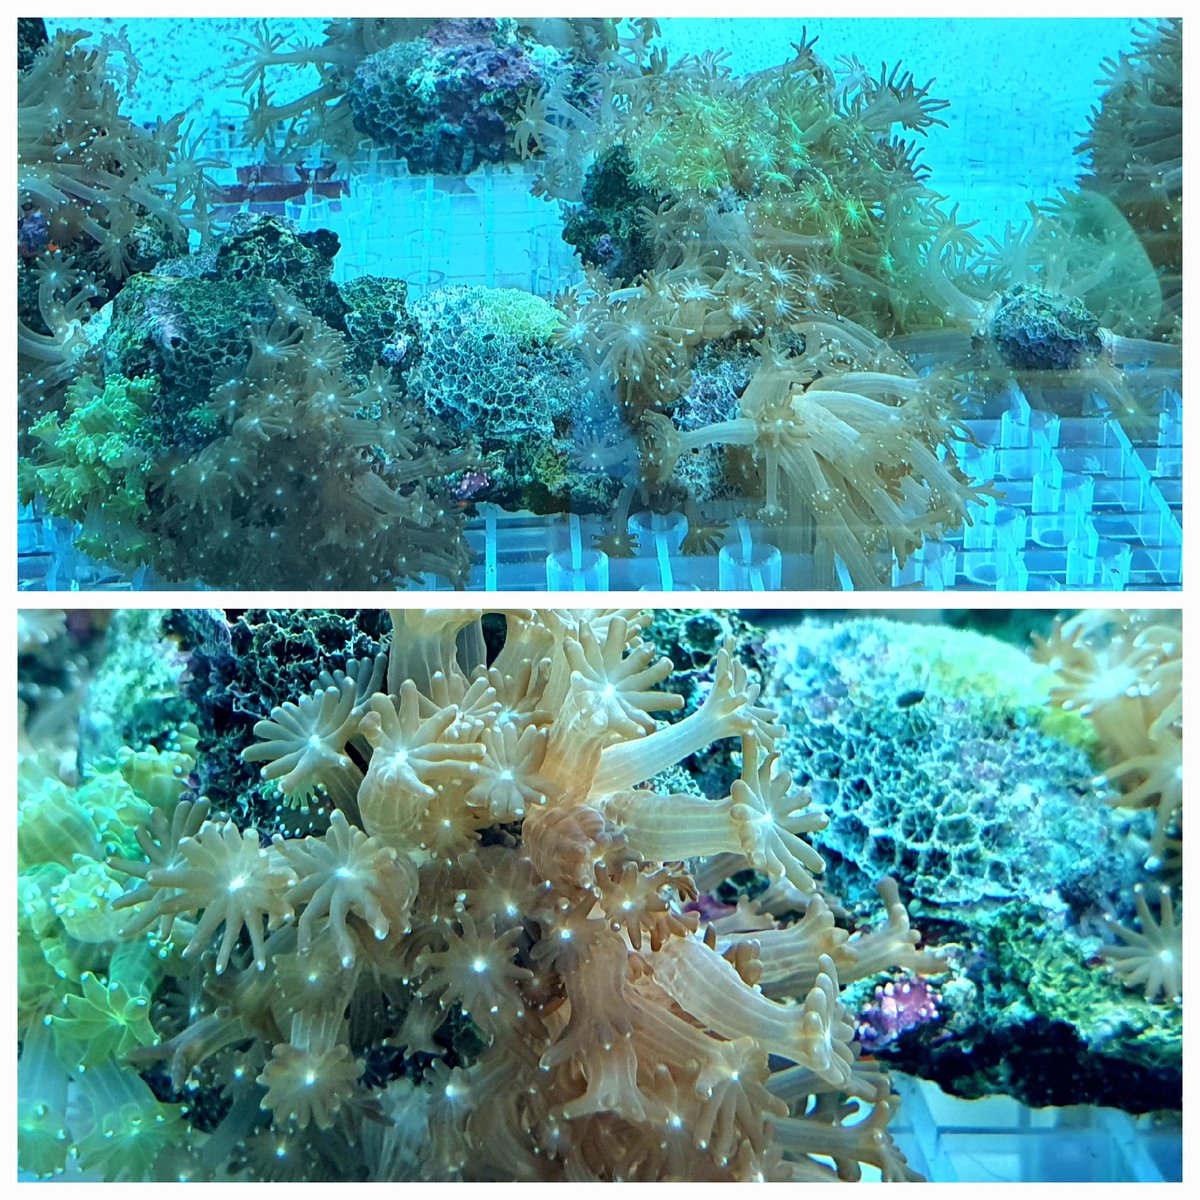 #aquaculture #experiment #marinelife #research #reefaquarium #coral #reeftank #underwaterlife #seastar #starfish  #coralbleaching #tropicalization #biodiversity #saveocean #marinebiologist #ecology 
#KIOST Marine Research Center #Jeju